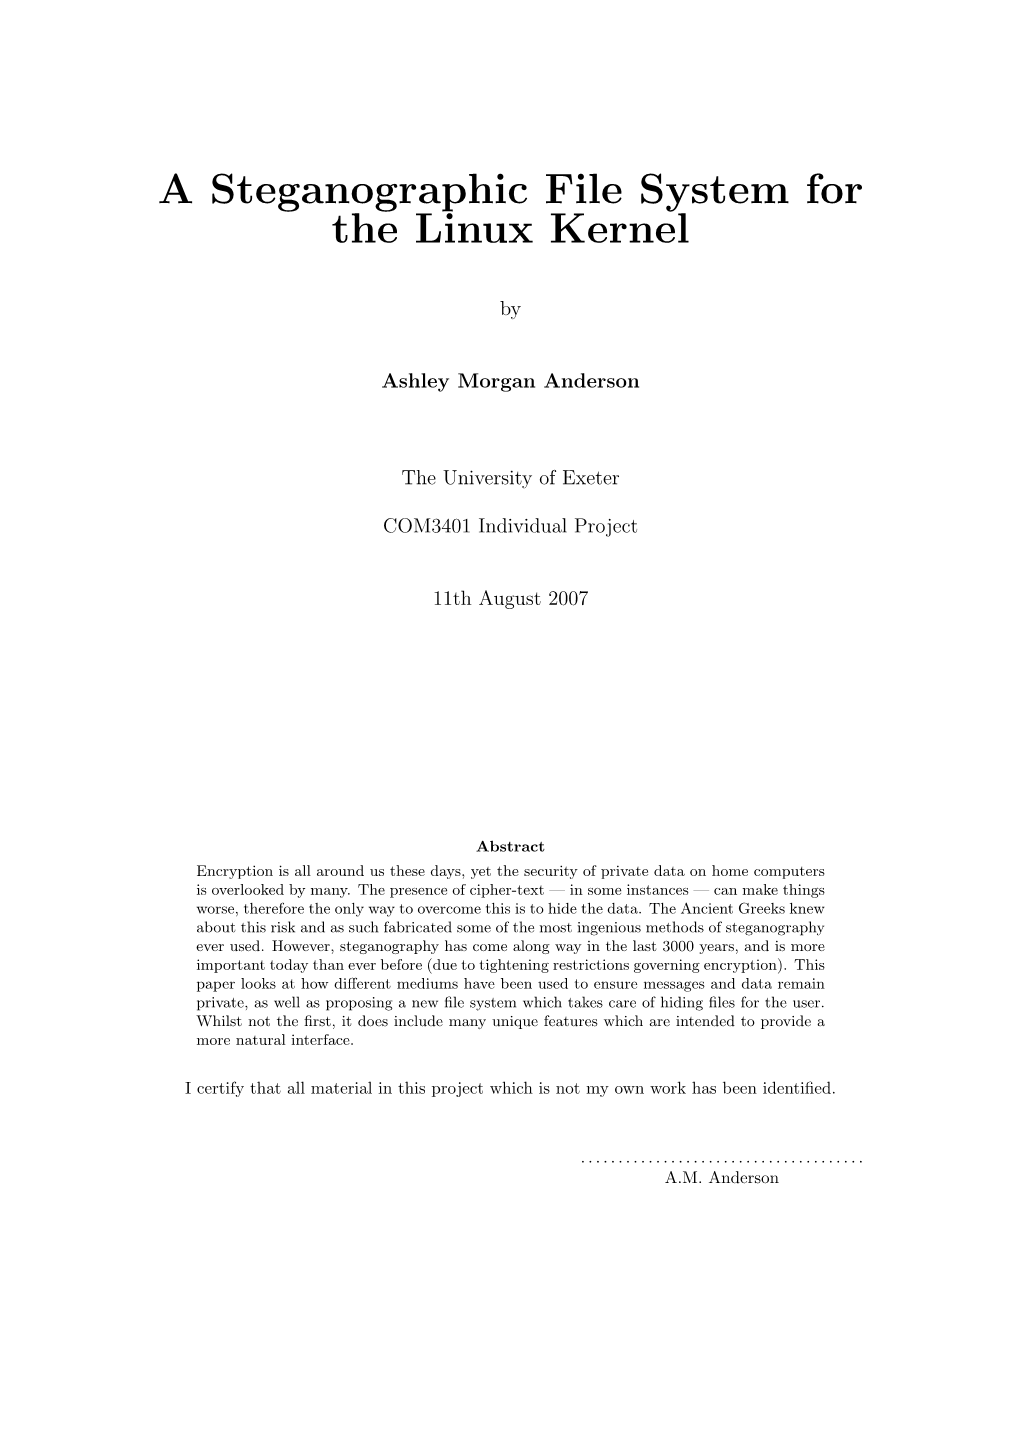 A Steganographic File System for the Linux Kernel